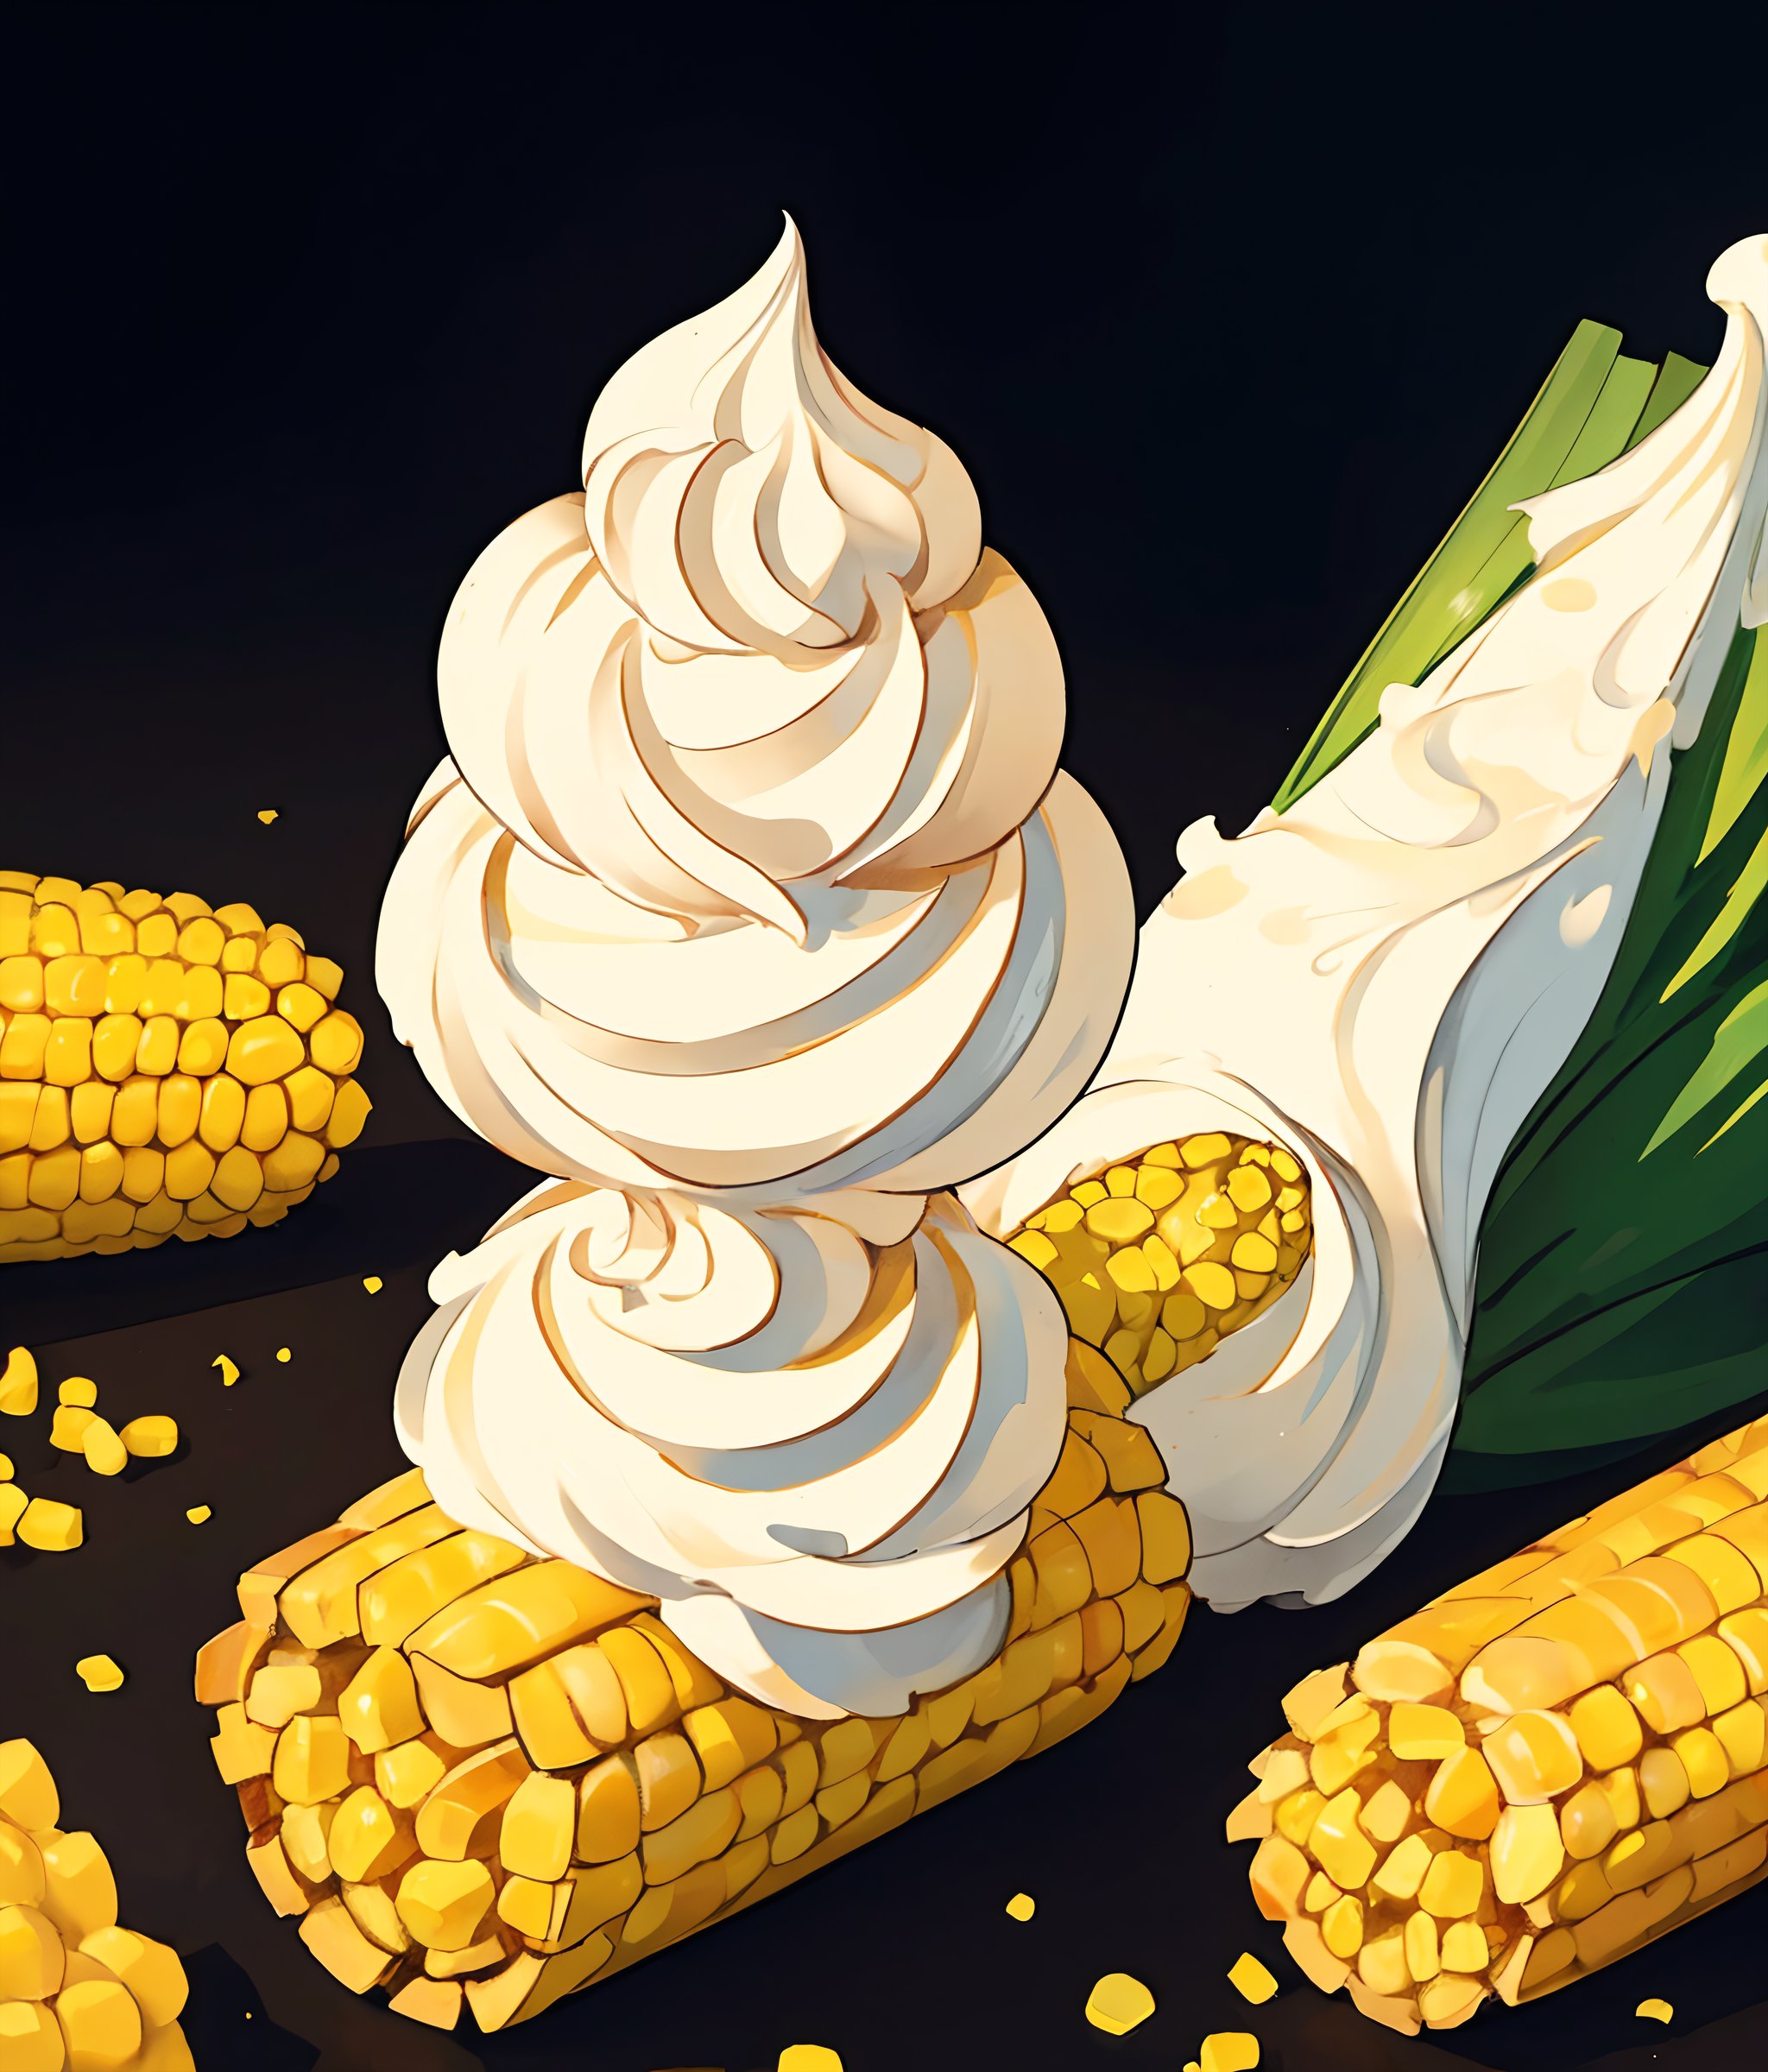 <lora:WhippedCreamTopStyle:0.2> WhippedCreamTopStyle corn on the cob